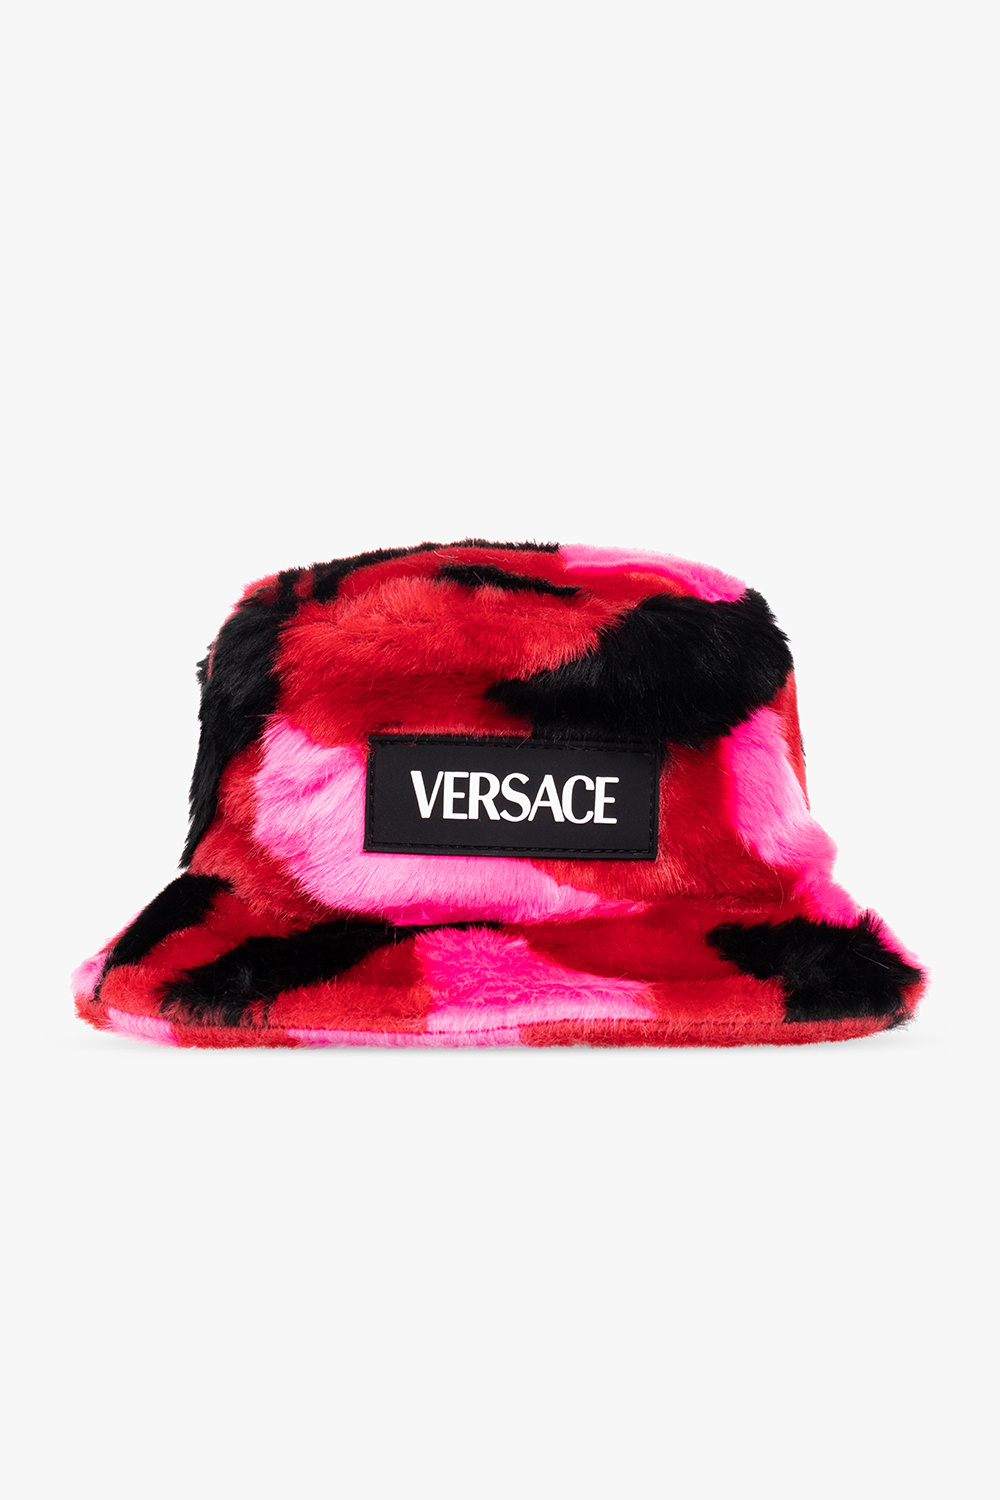 Versace Kids clothing women footwear-accessories accessories caps